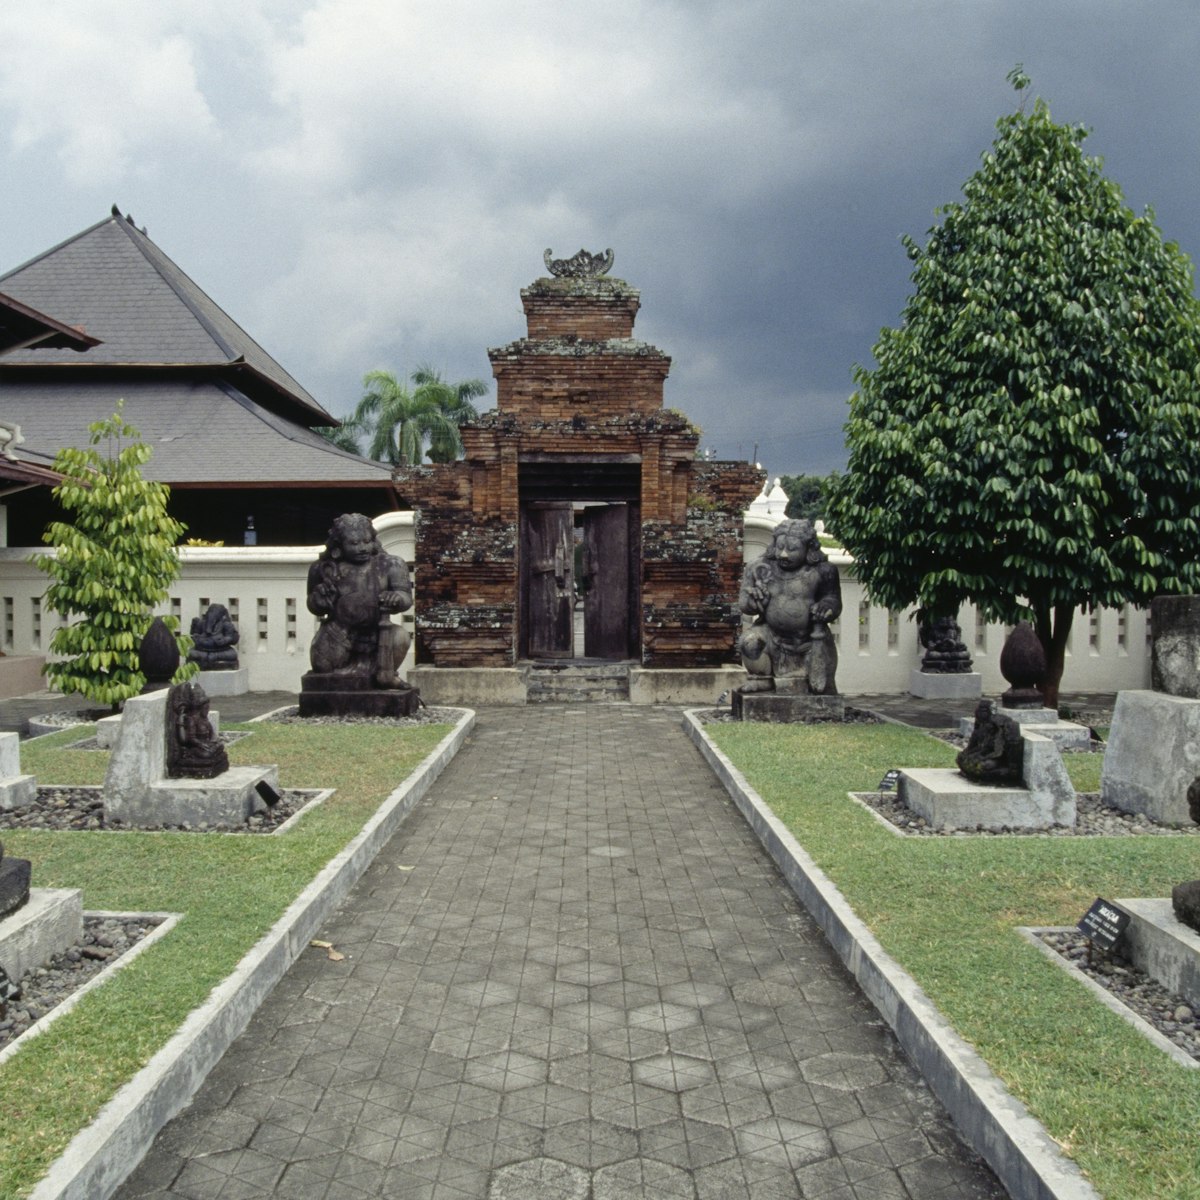 Entrance to Sonobudoyo Museum, Yogyakarta, Java, Indonesia